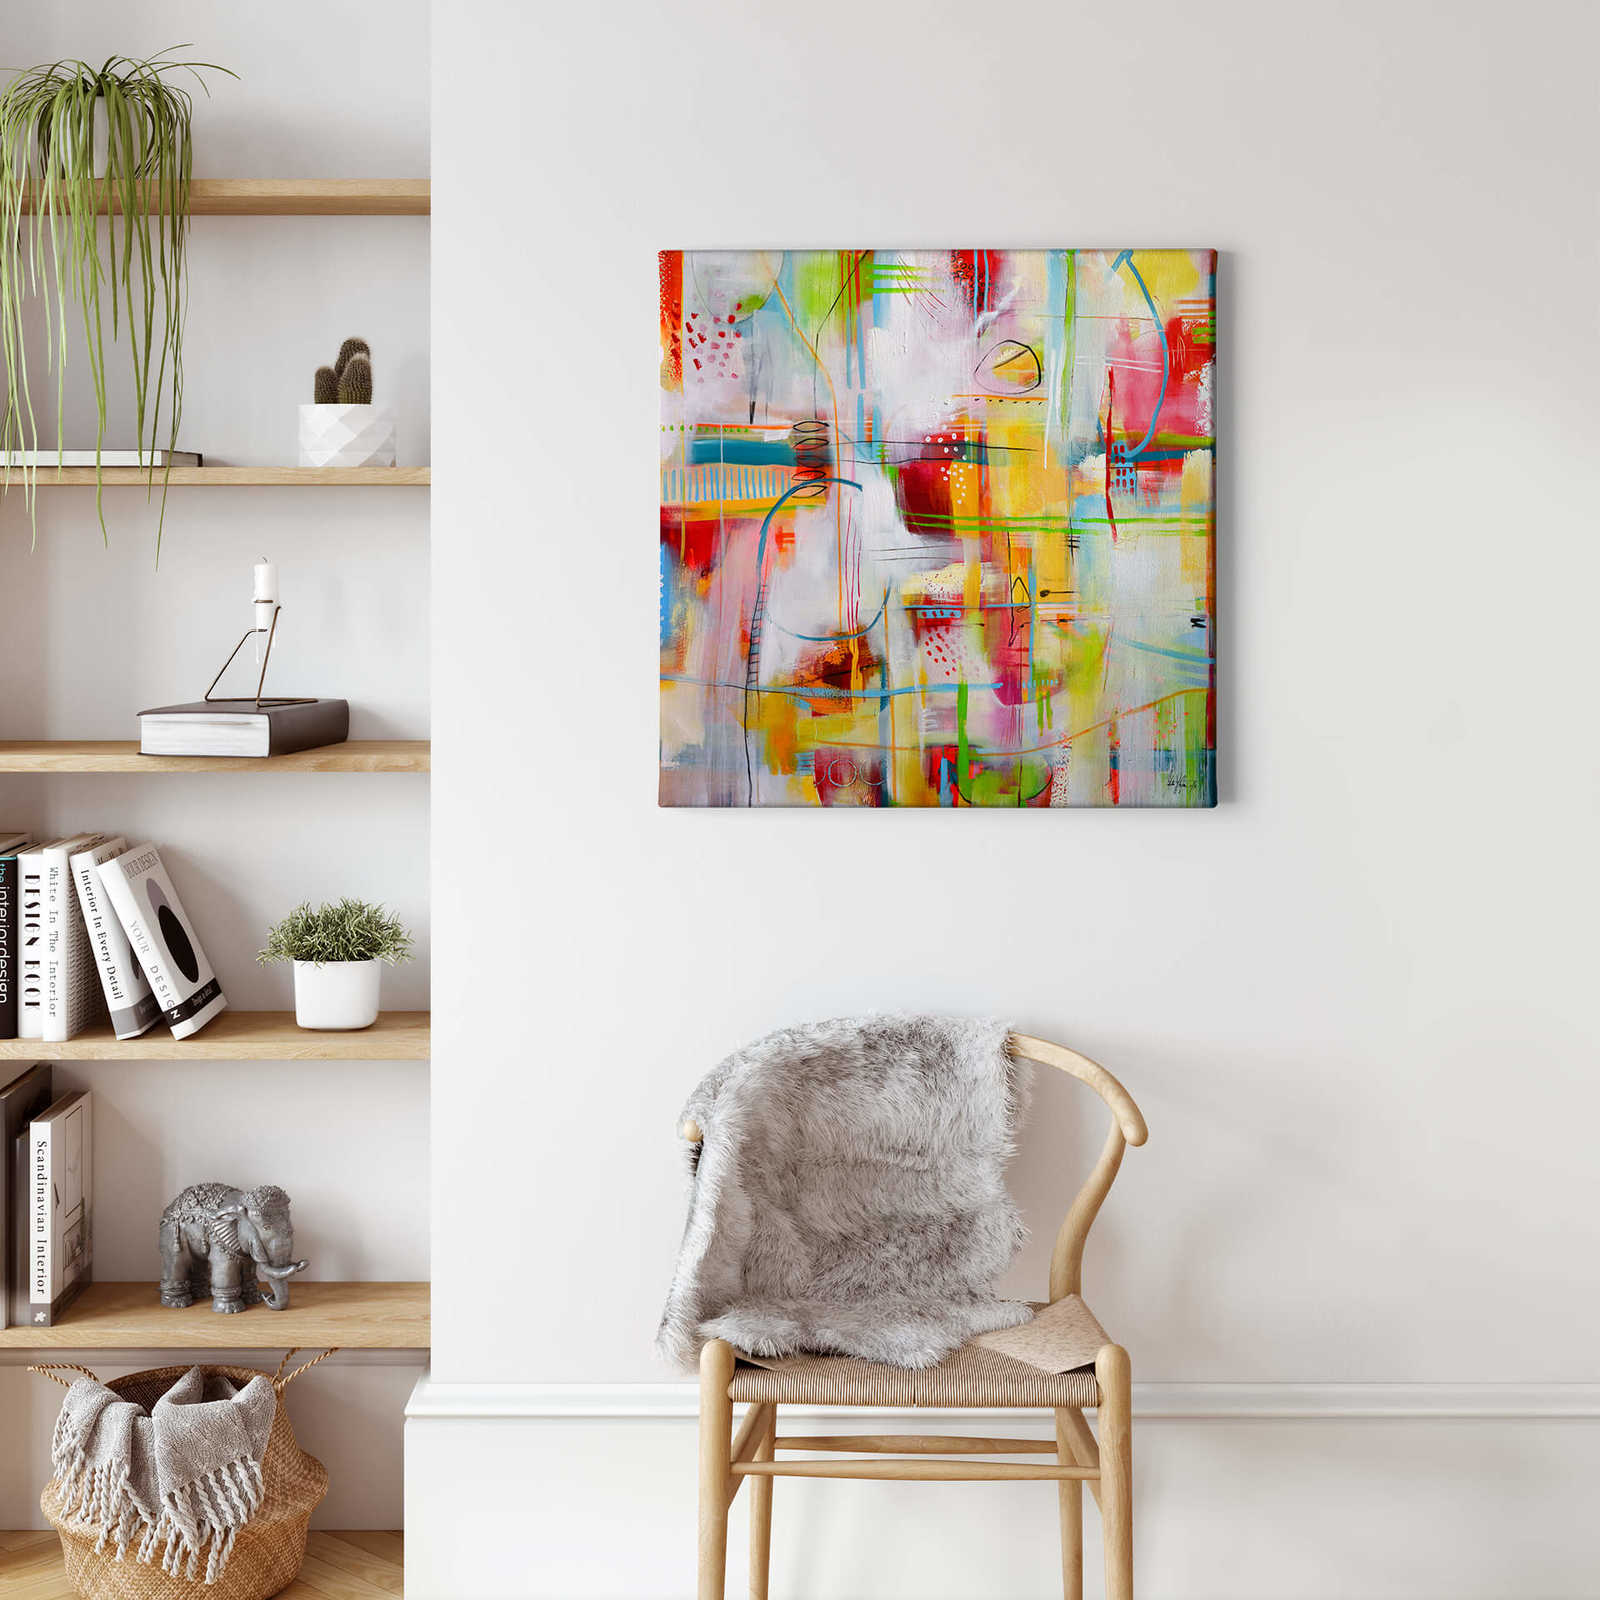             Fedrau toile art abstrait - 0,50 m x 0,50 m
        